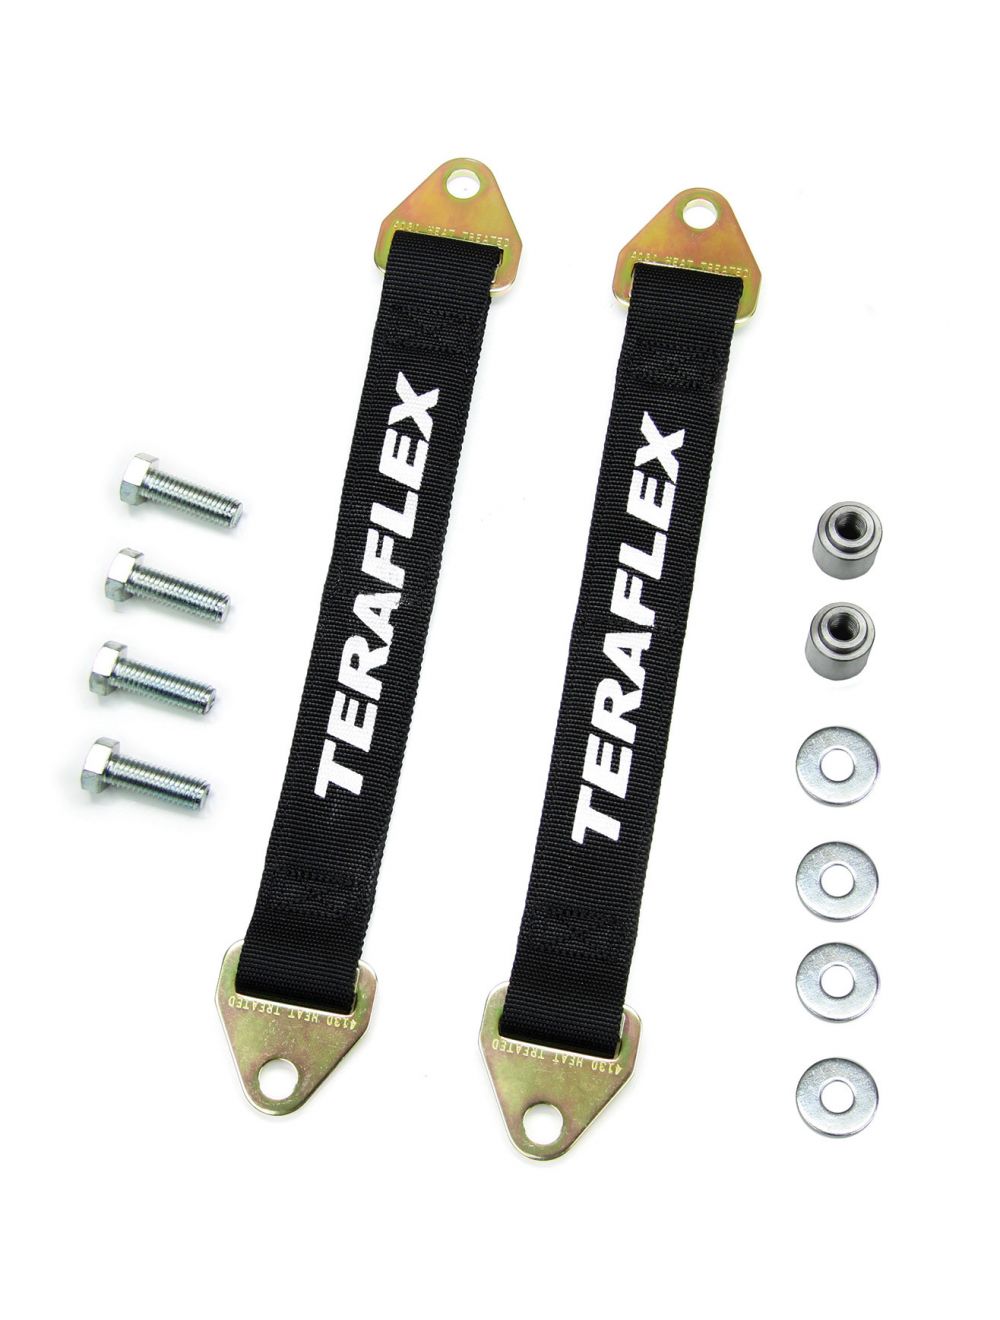 TeraFlex JK 13.5" Suspension Limit Strap Kit - Rear (3/4" Lift) | TeraFlex